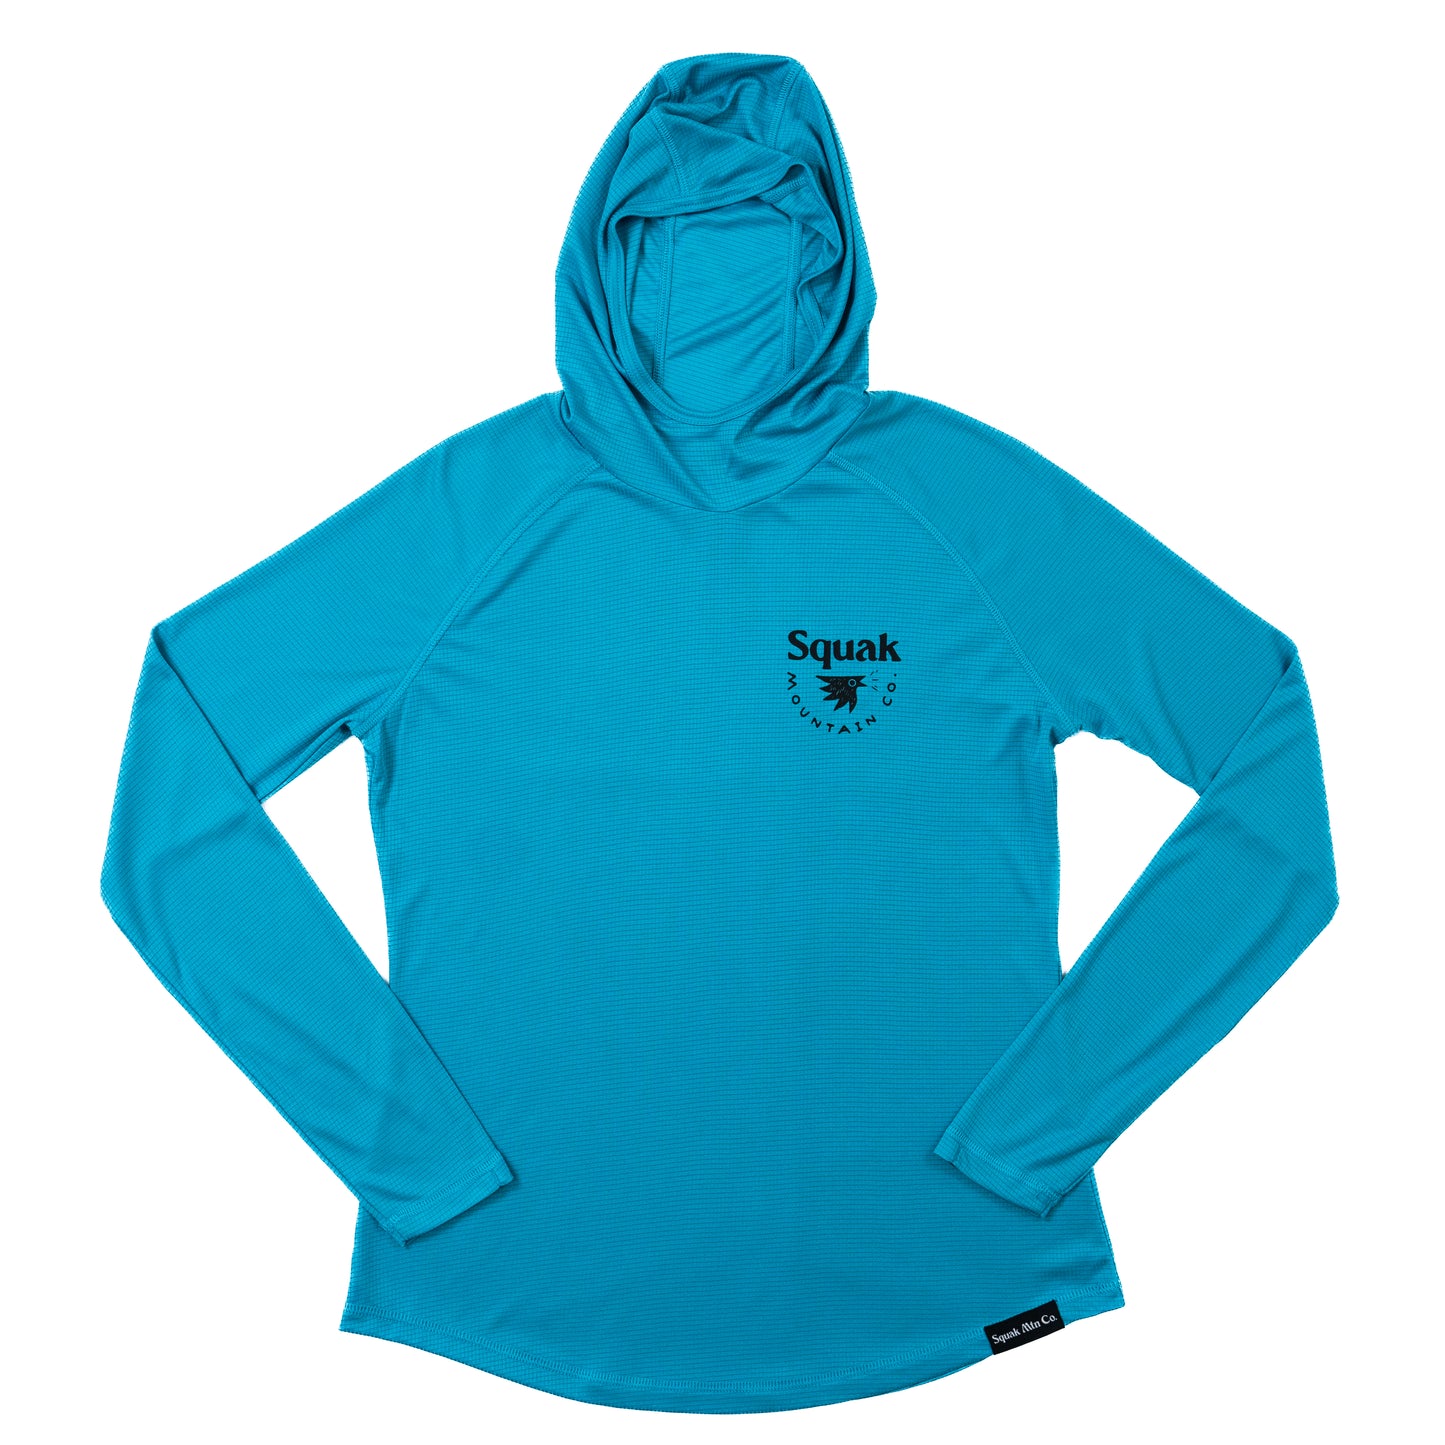 Aqua blue womens outdoor sun hoodie from Squak Mountain Co.